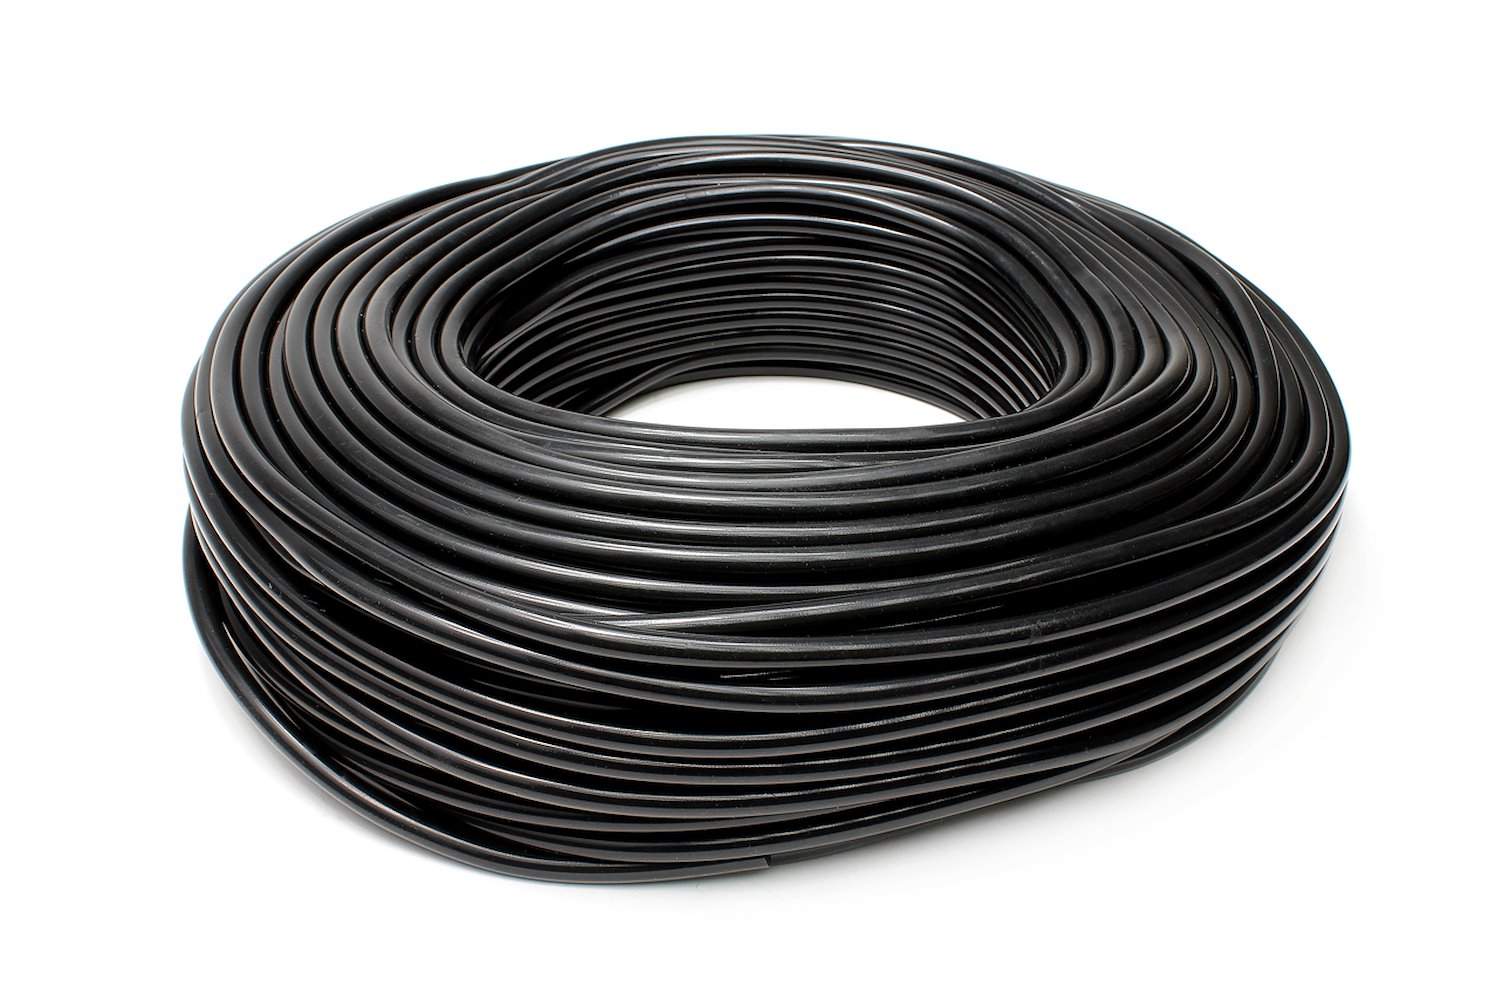 HTSVH3TW-BLKx100 High-Temperature Silicone Vacuum Hose Tubing, 1/8 in. ID, 100 ft. Roll, Black